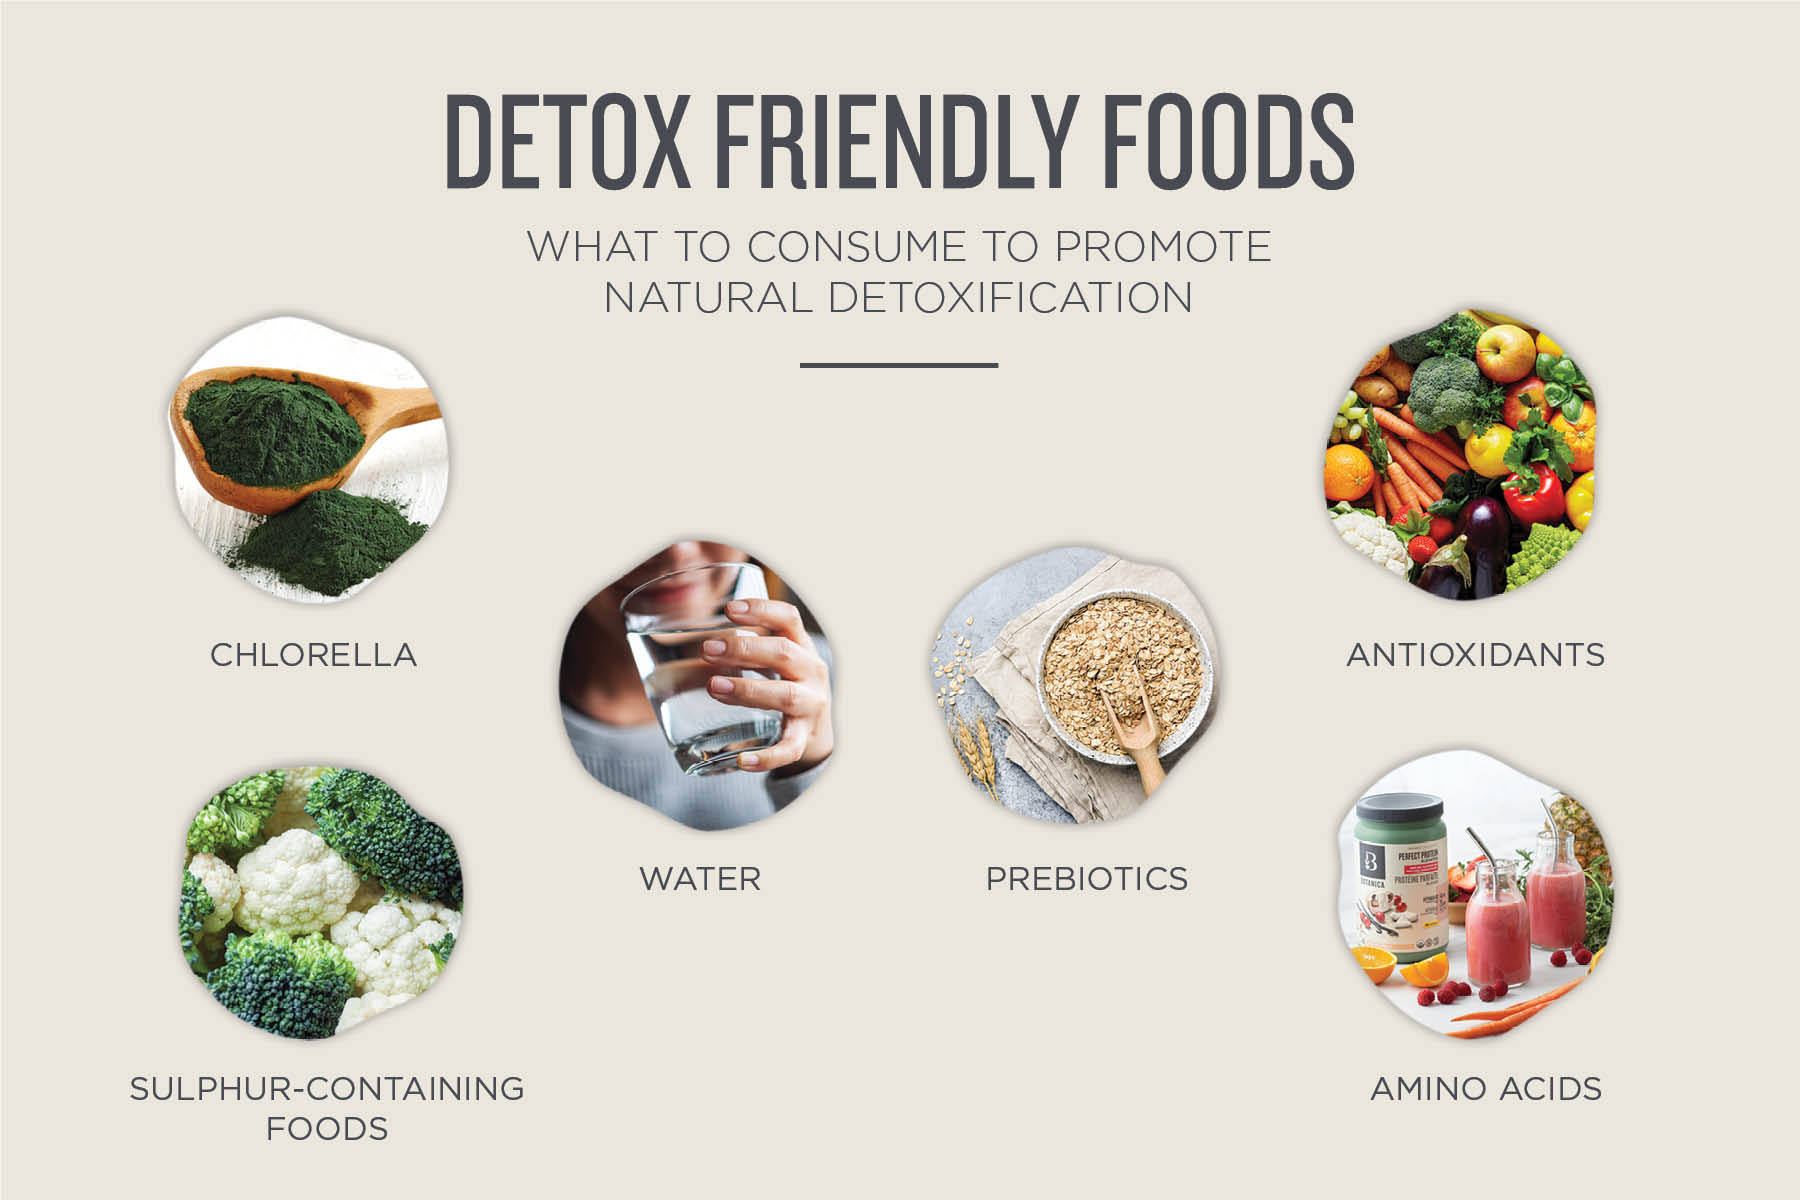 Detox friendly foods